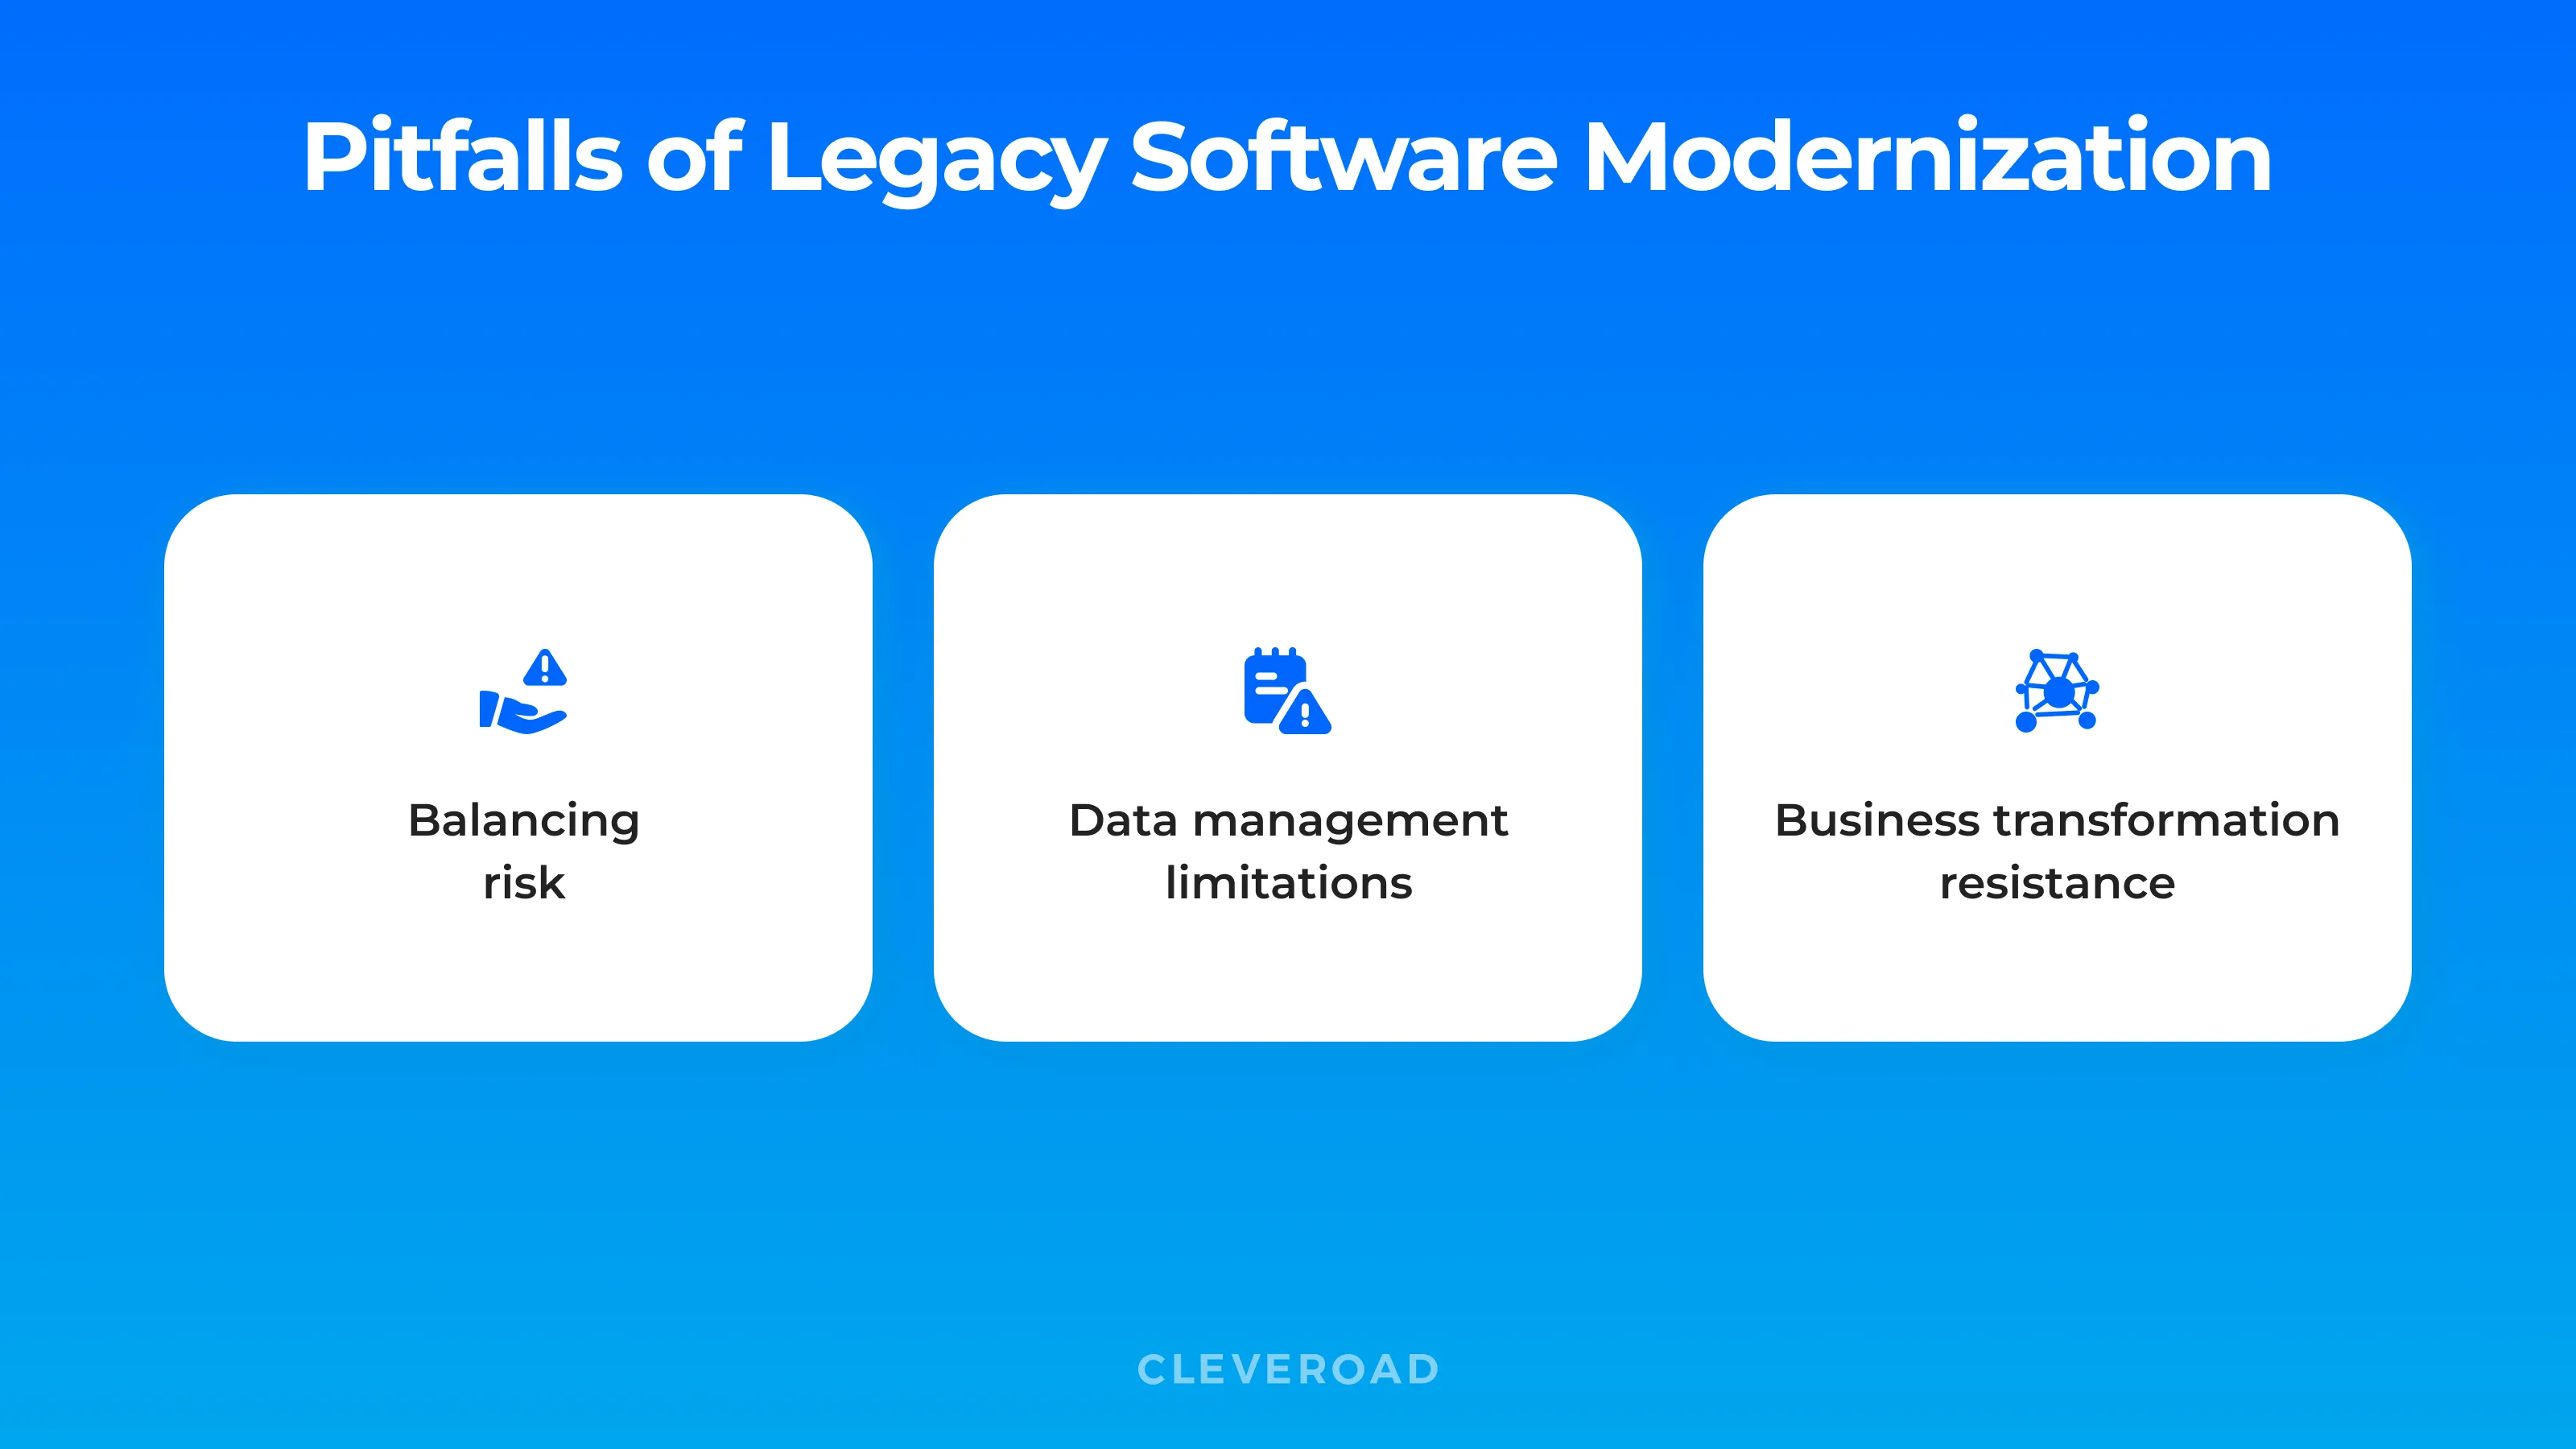 Challenges of legacy software modernization